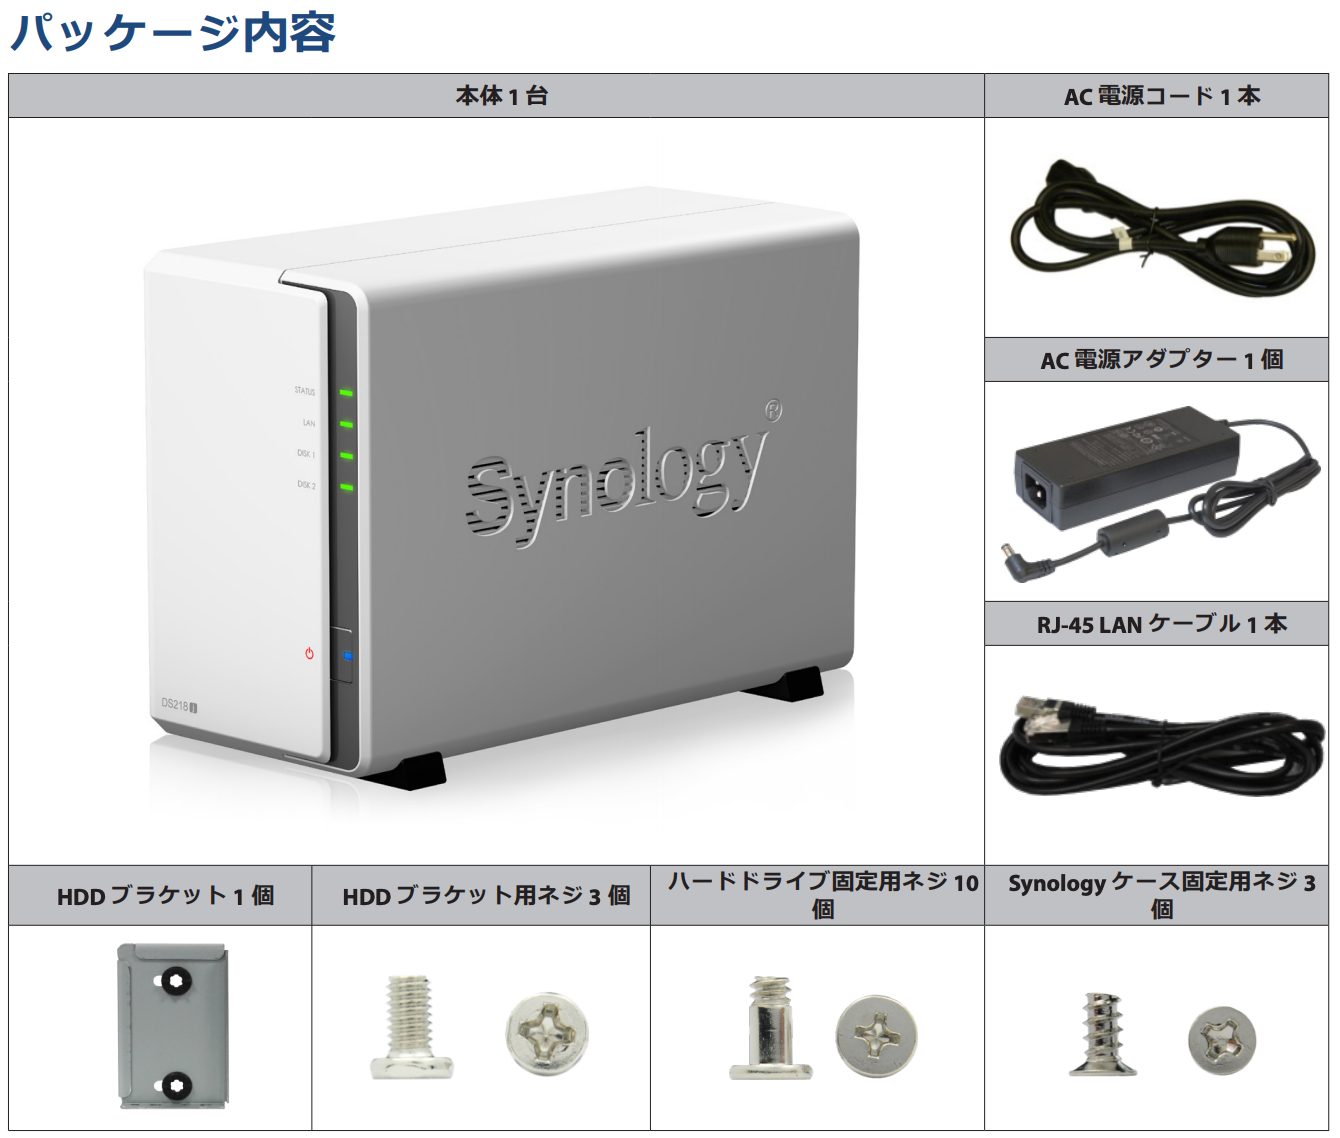 Synology DS218j」が届いたので開封からセットアップまでを行なった 